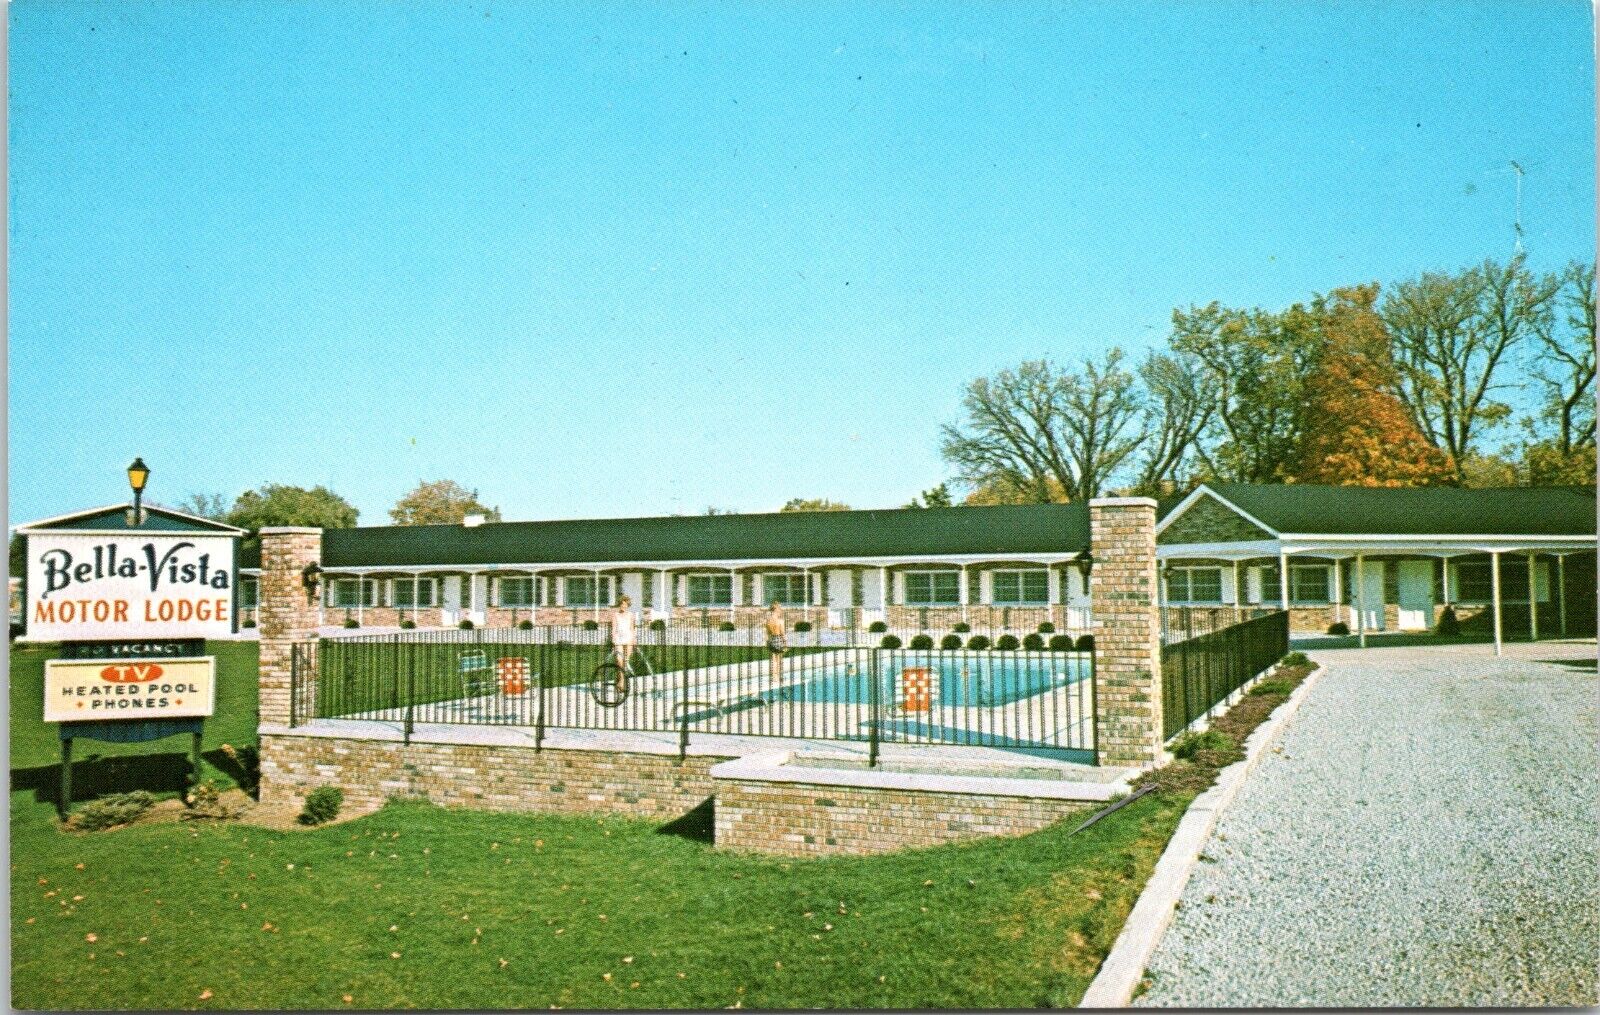 Bella Vista Motor Lodge, Bear Lake, Michigan - c1960s Chrome Postcard - Pool